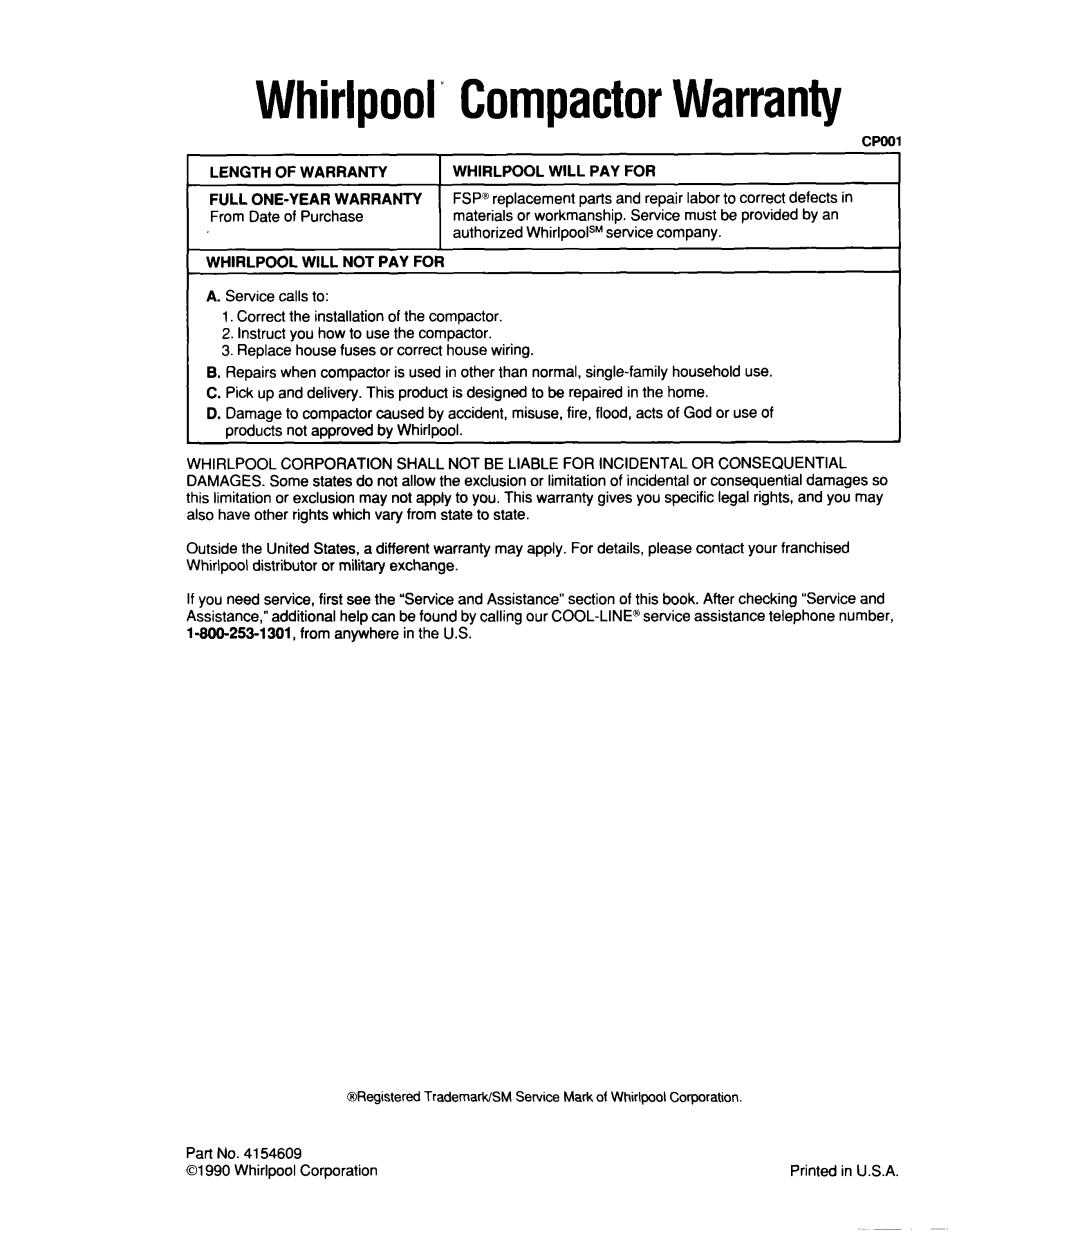 Whirlpool TU4100X, TUSIOOX, TF4600X, TFSGOOX manual Whirlpool”CompactorWarranty 